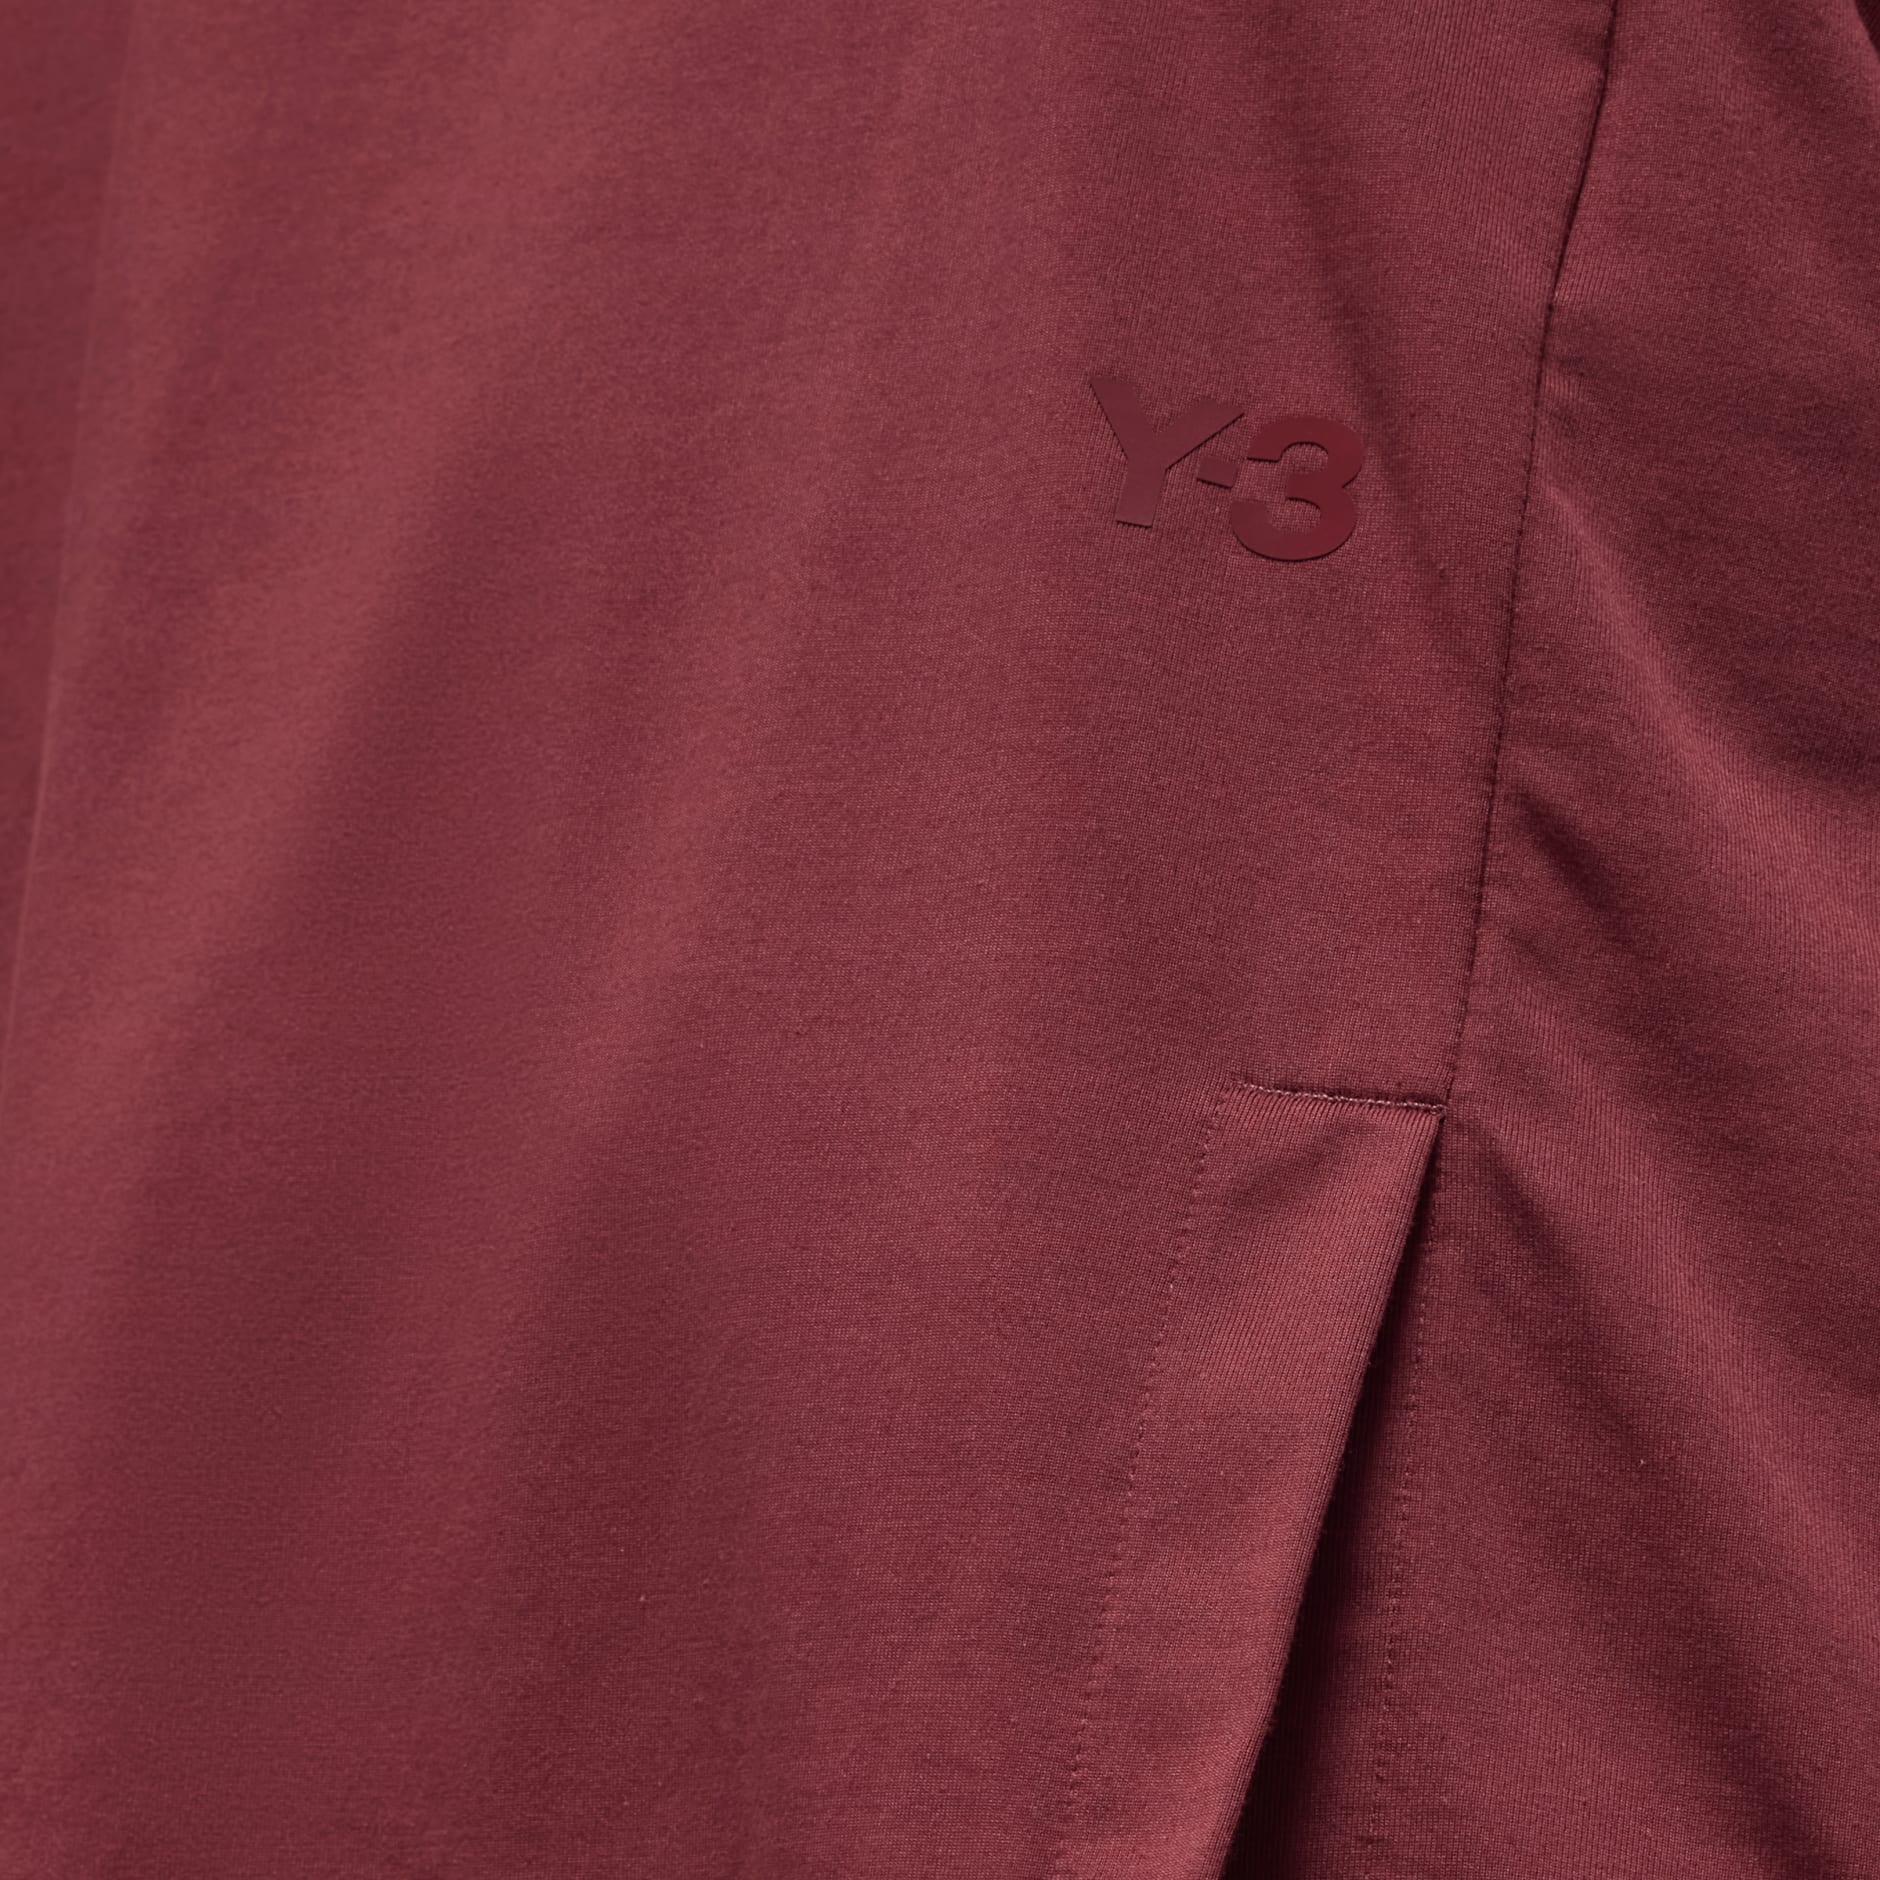 Clothing - Y-3 Premium Loose Short Sleeve Tee - Burgundy | adidas South ...